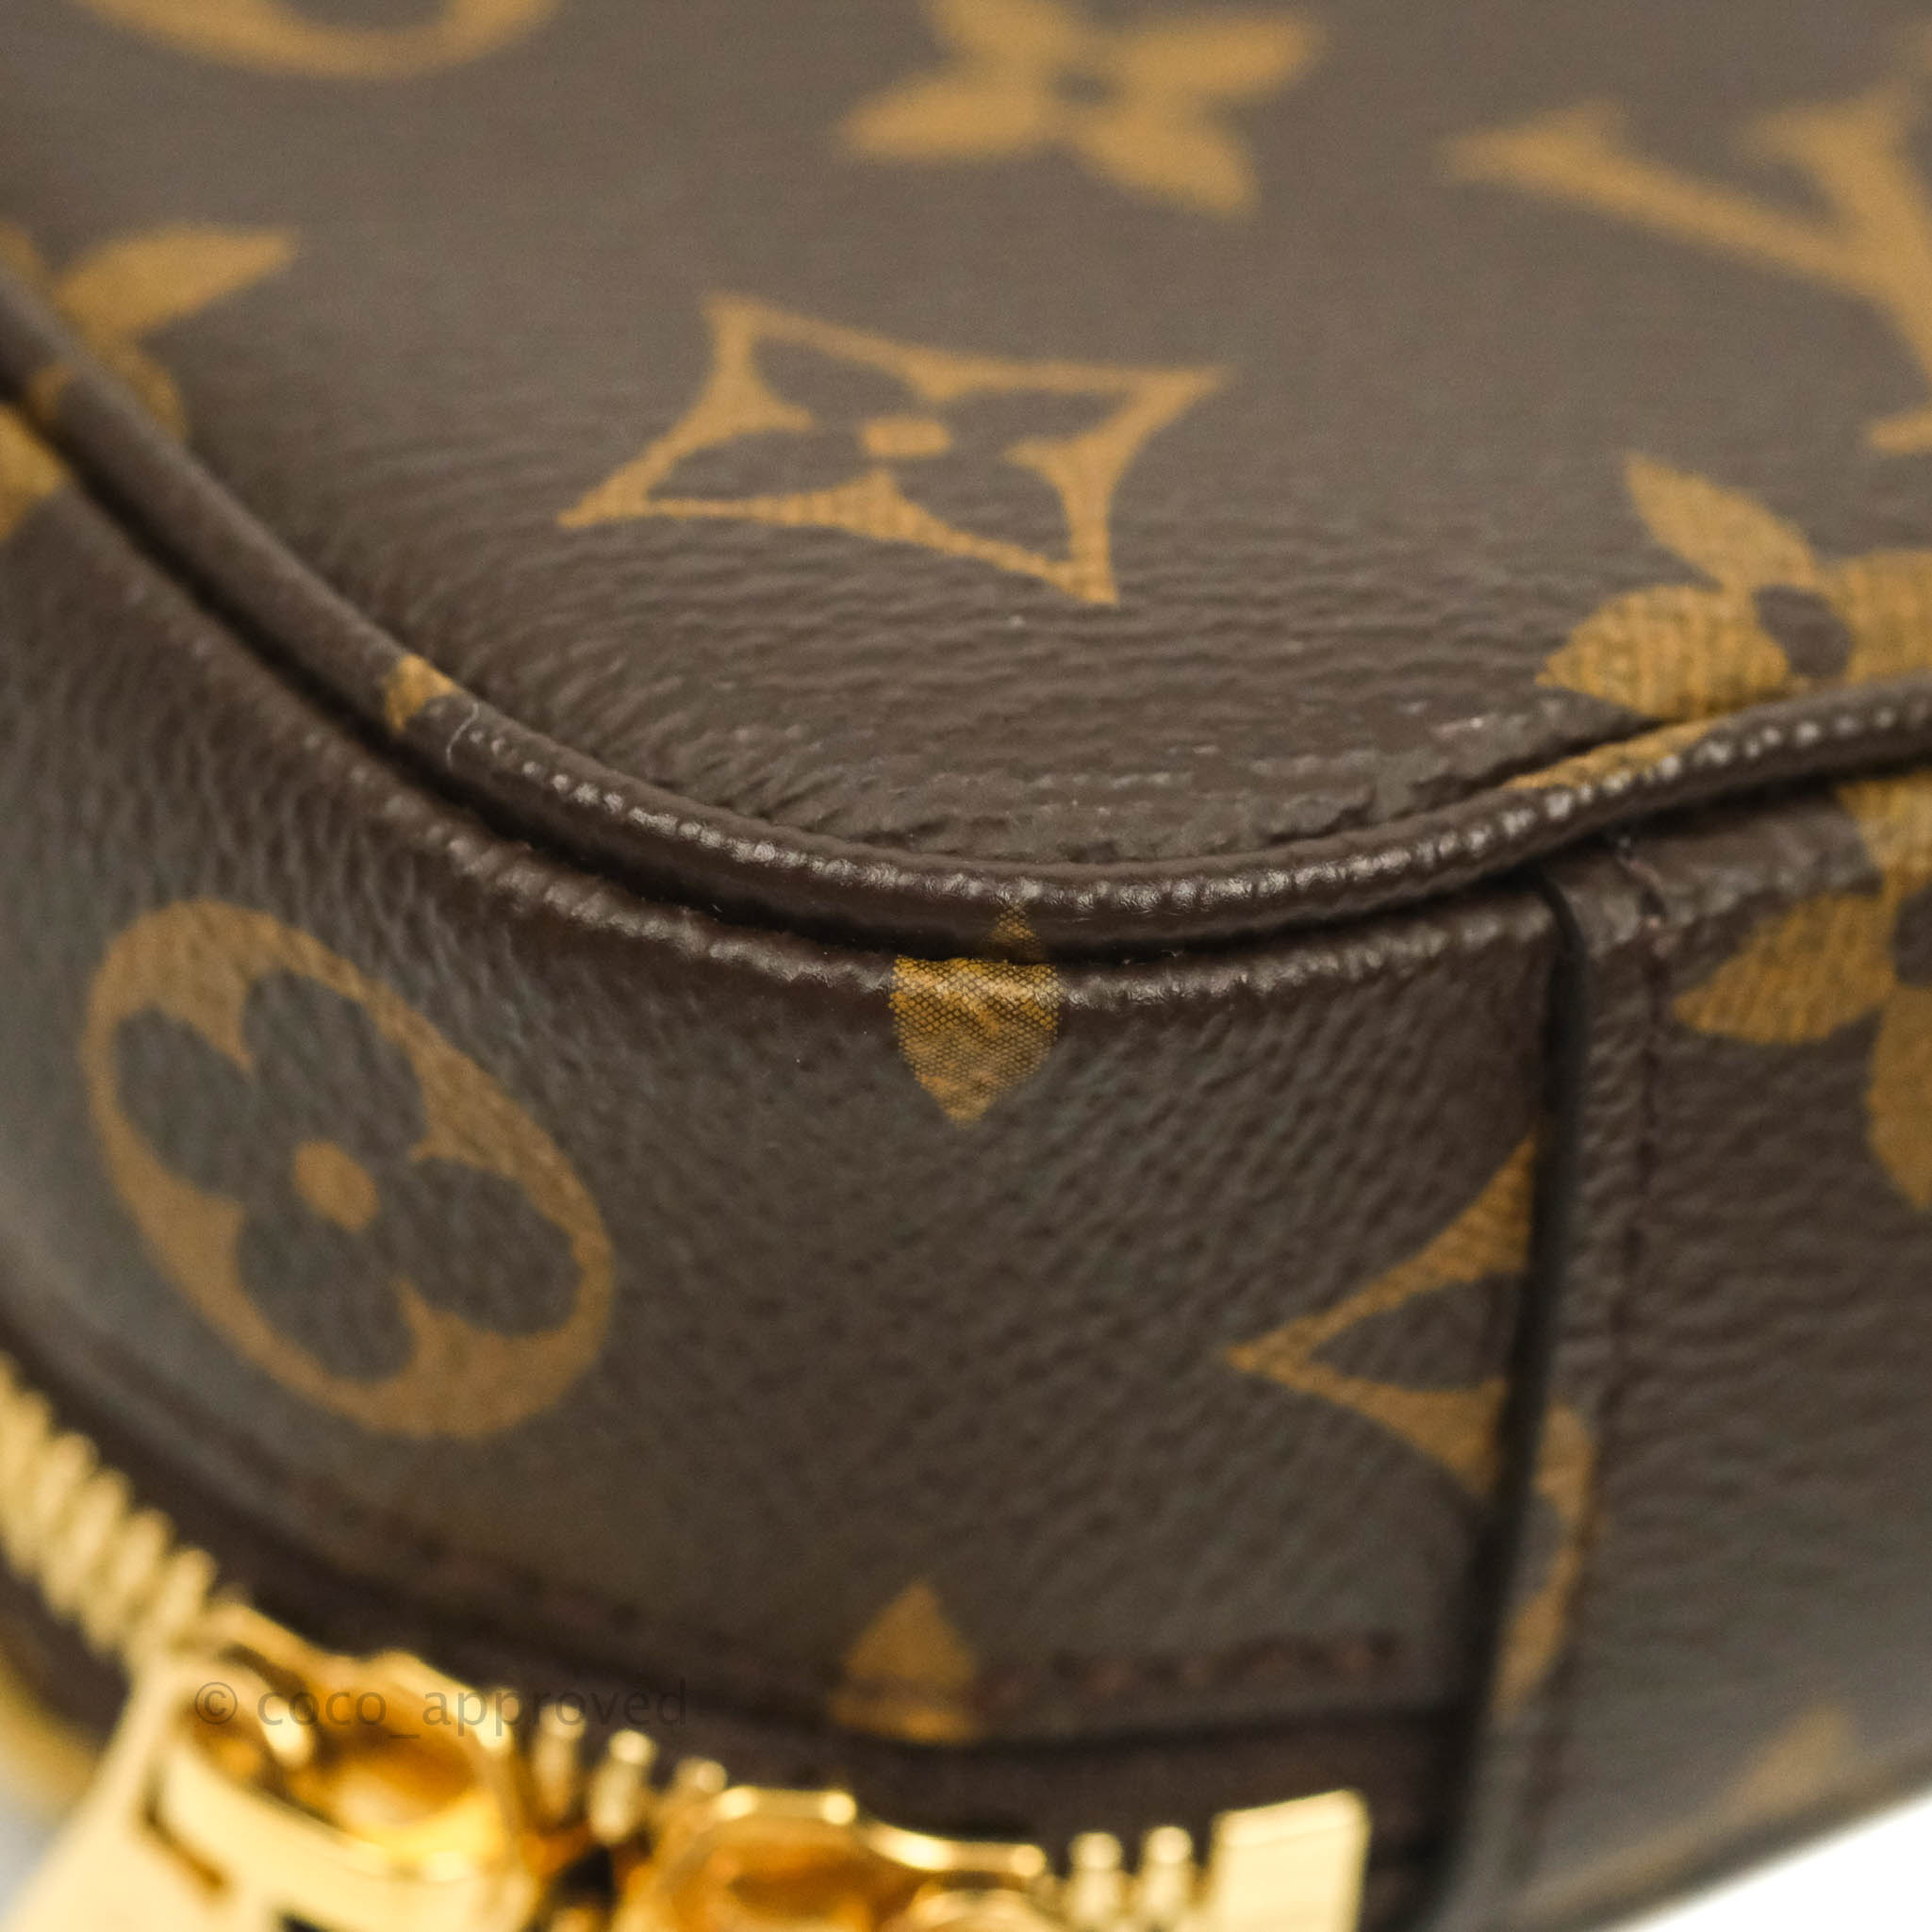 Louis Vuitton Monogram Canvas Utility Crossbody Bag – Coco Approved Studio